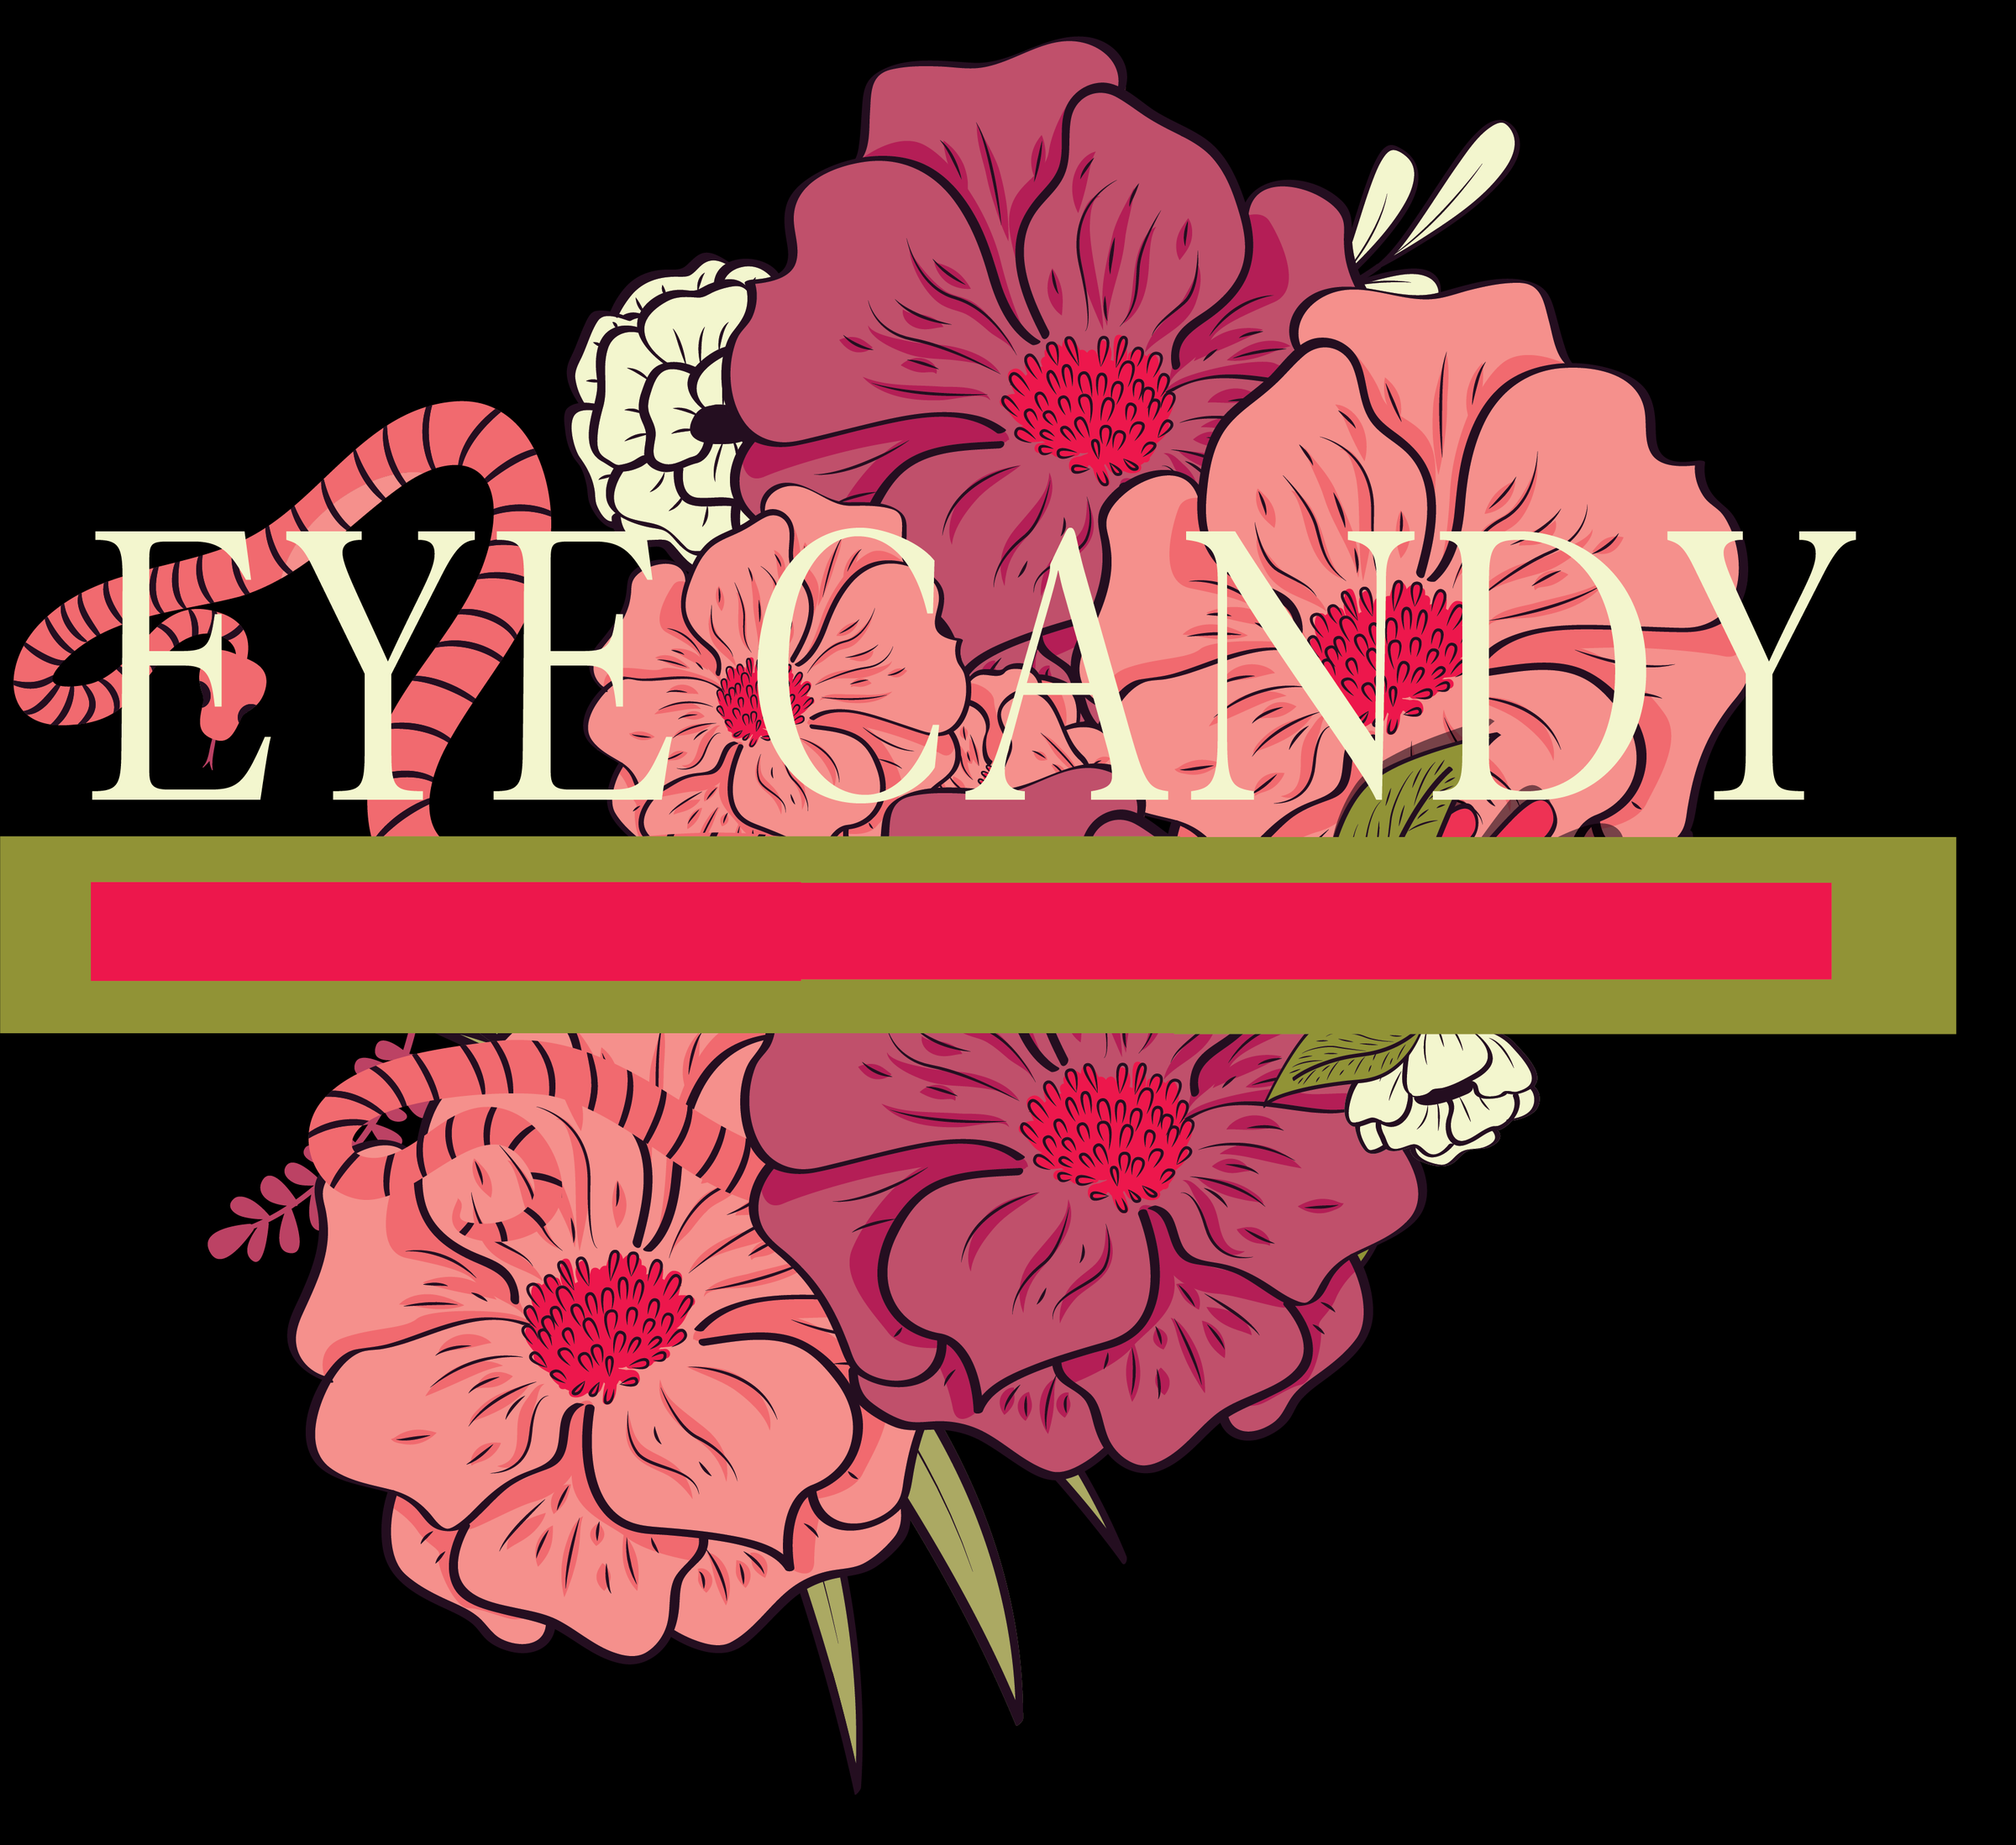 MS Eye Candy - Clothing Company